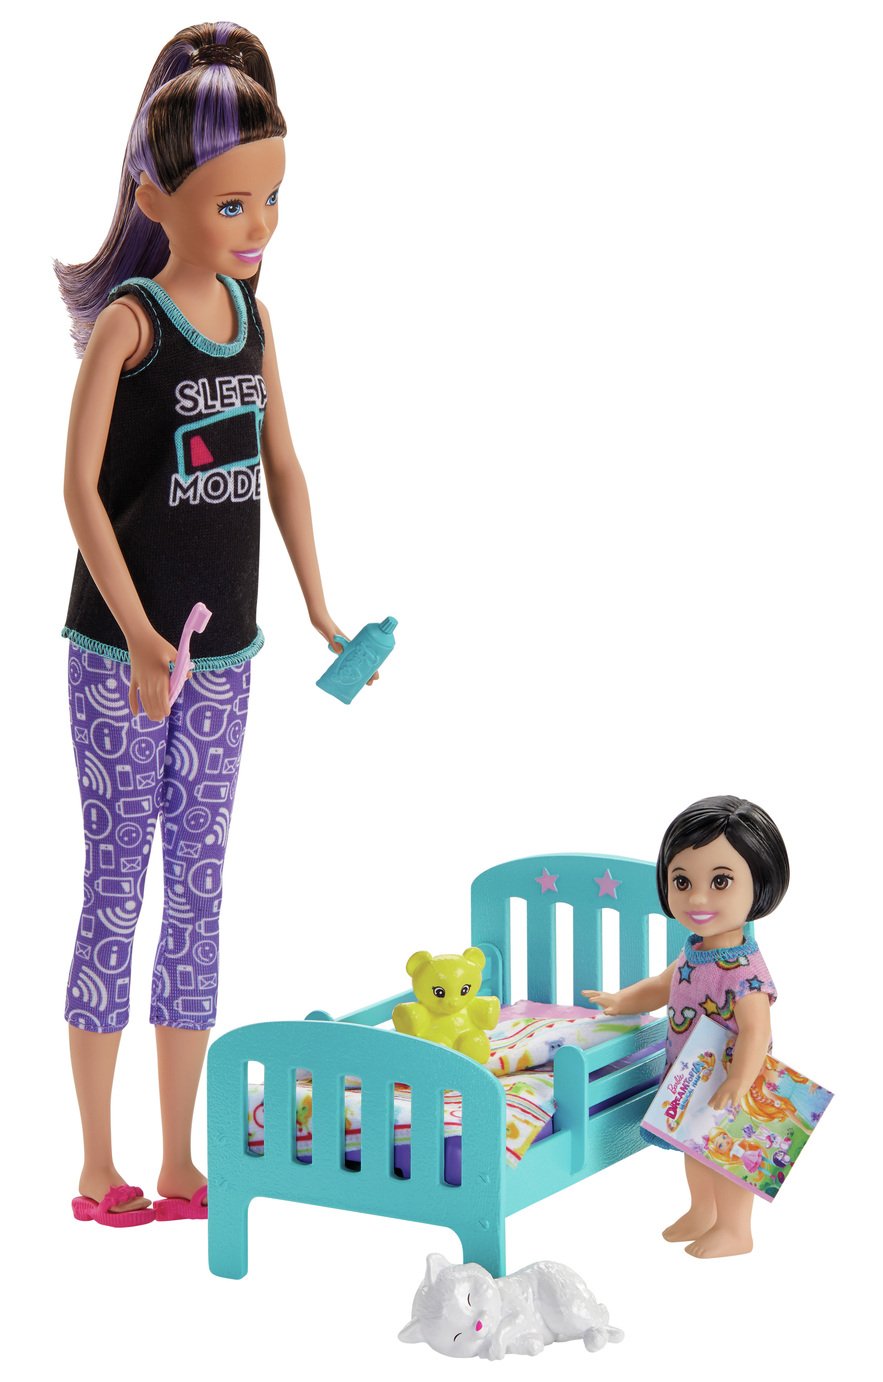 barbie life in the dreamhouse season 2 netflix